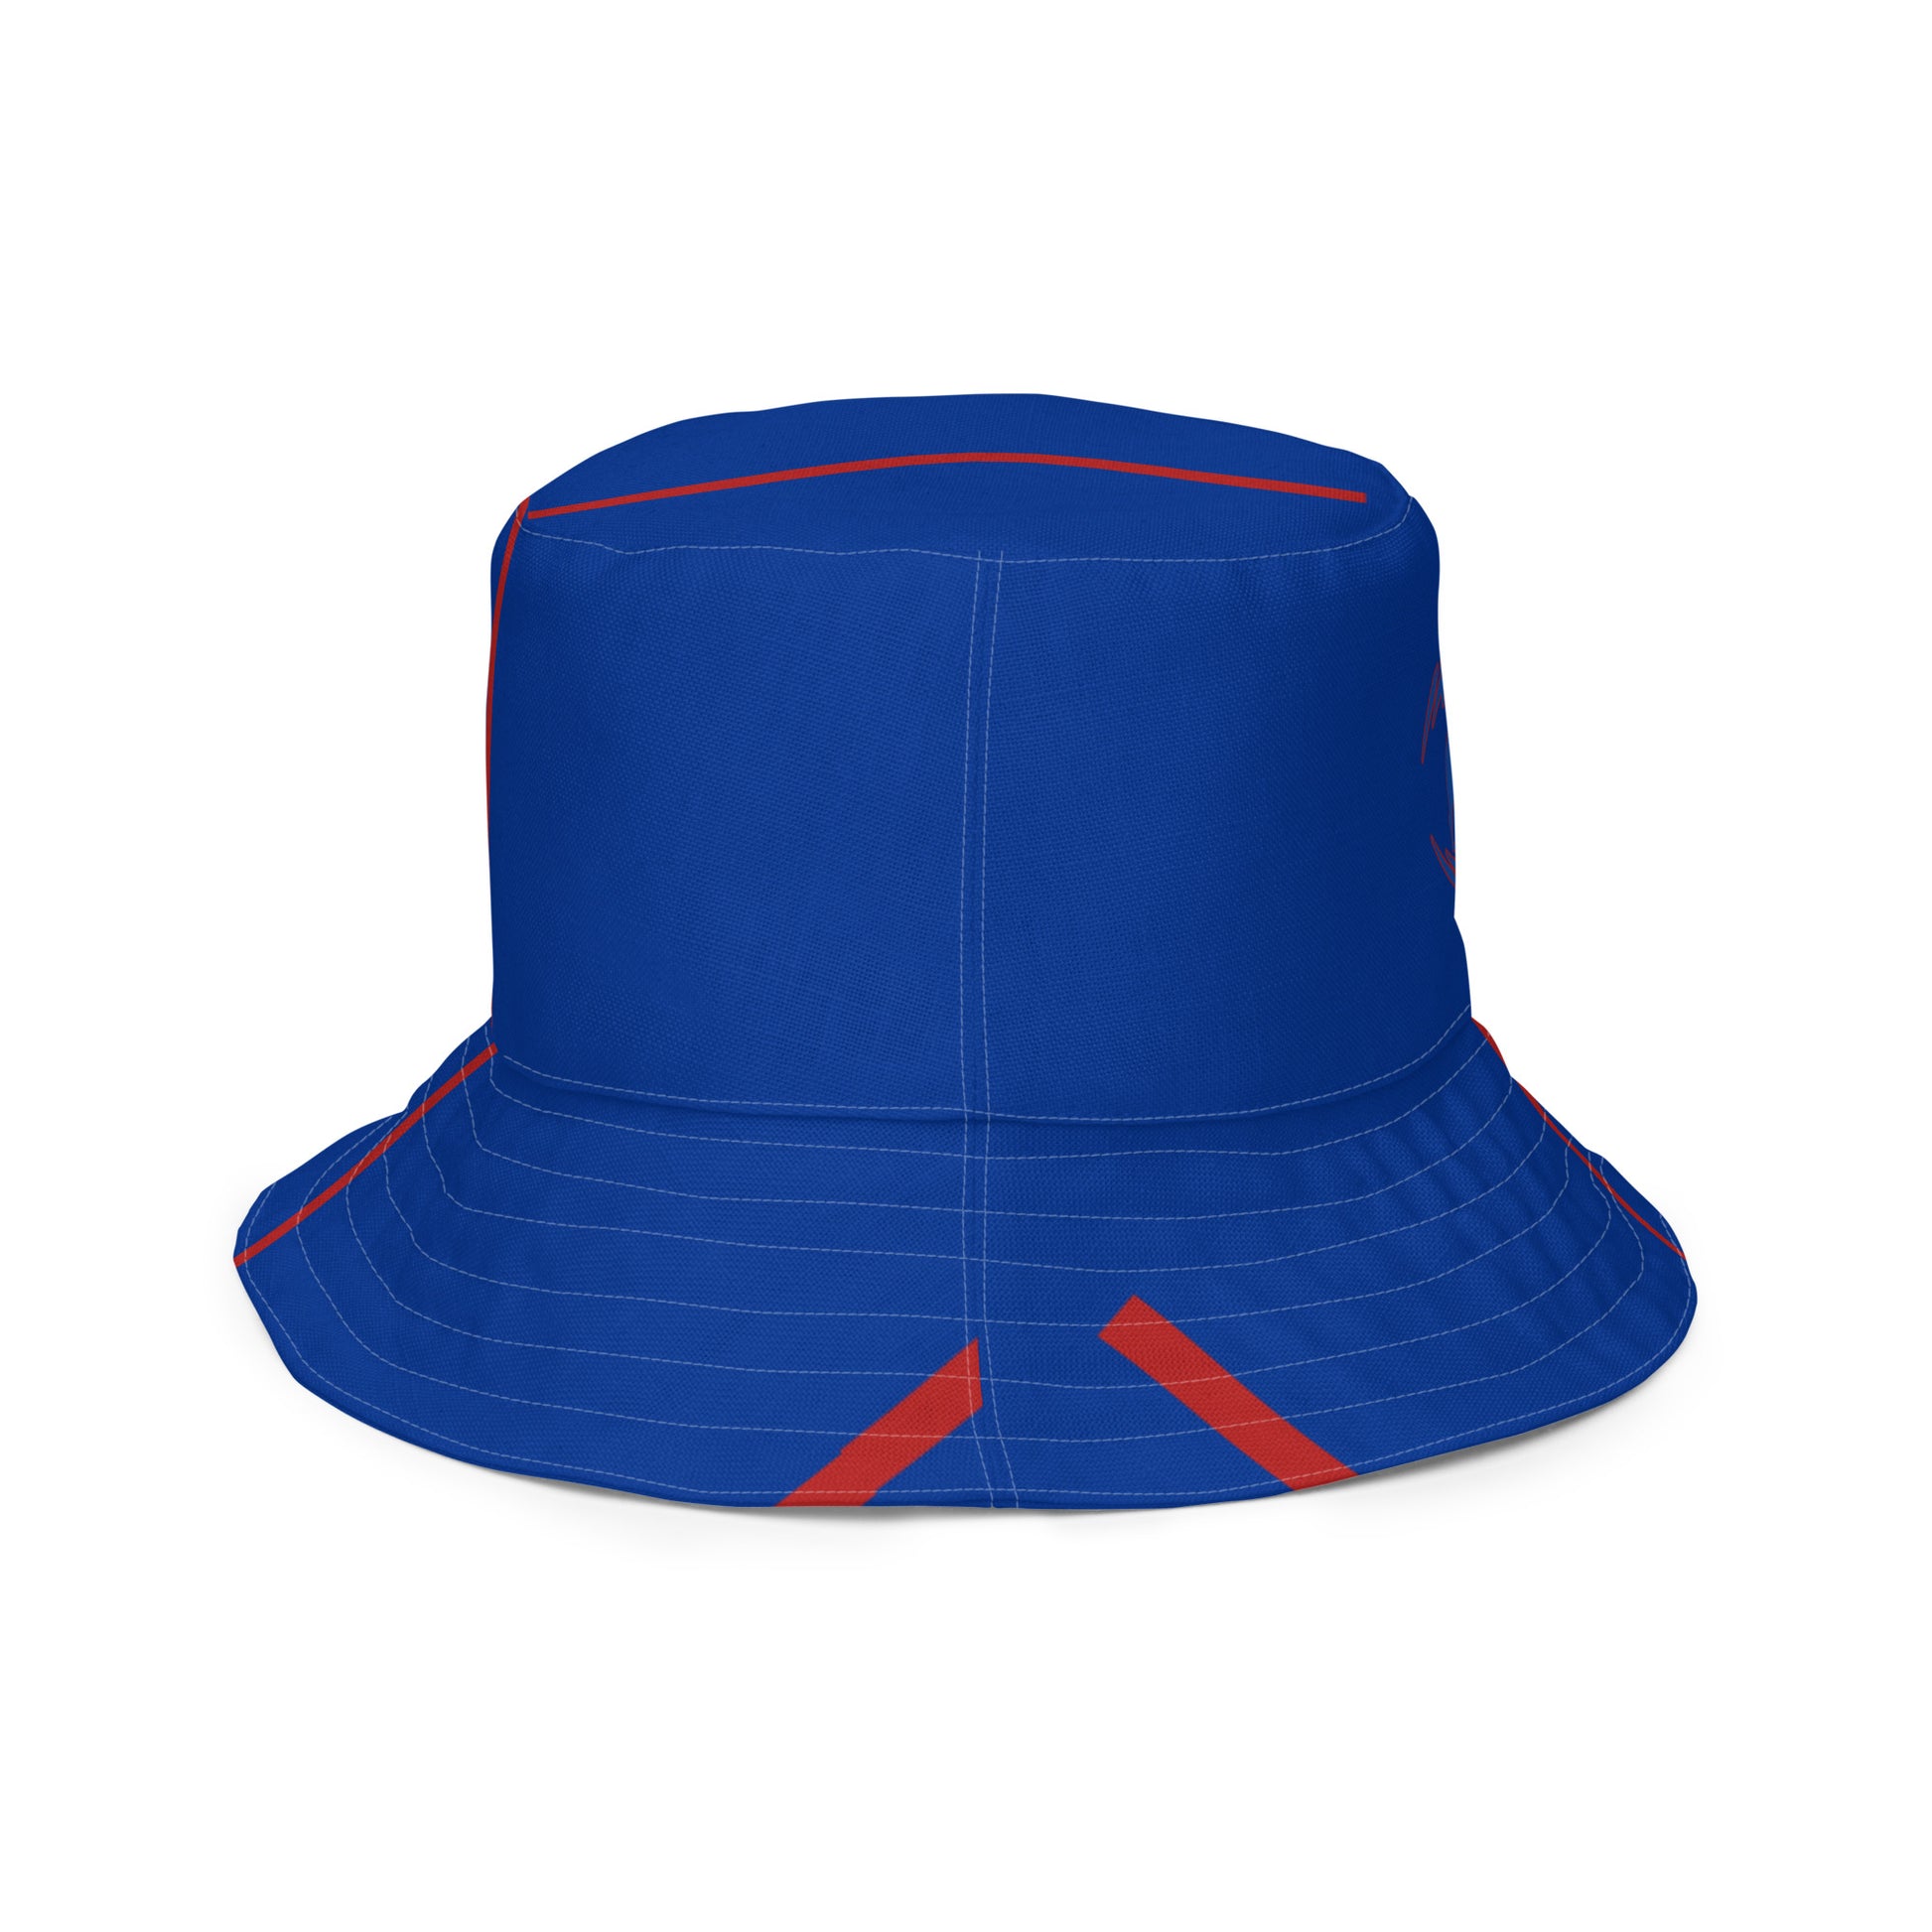 Damar Hamlin 3 Bucket Hat / Love For 3 / Buffalo Bills 3 Bucket Hat